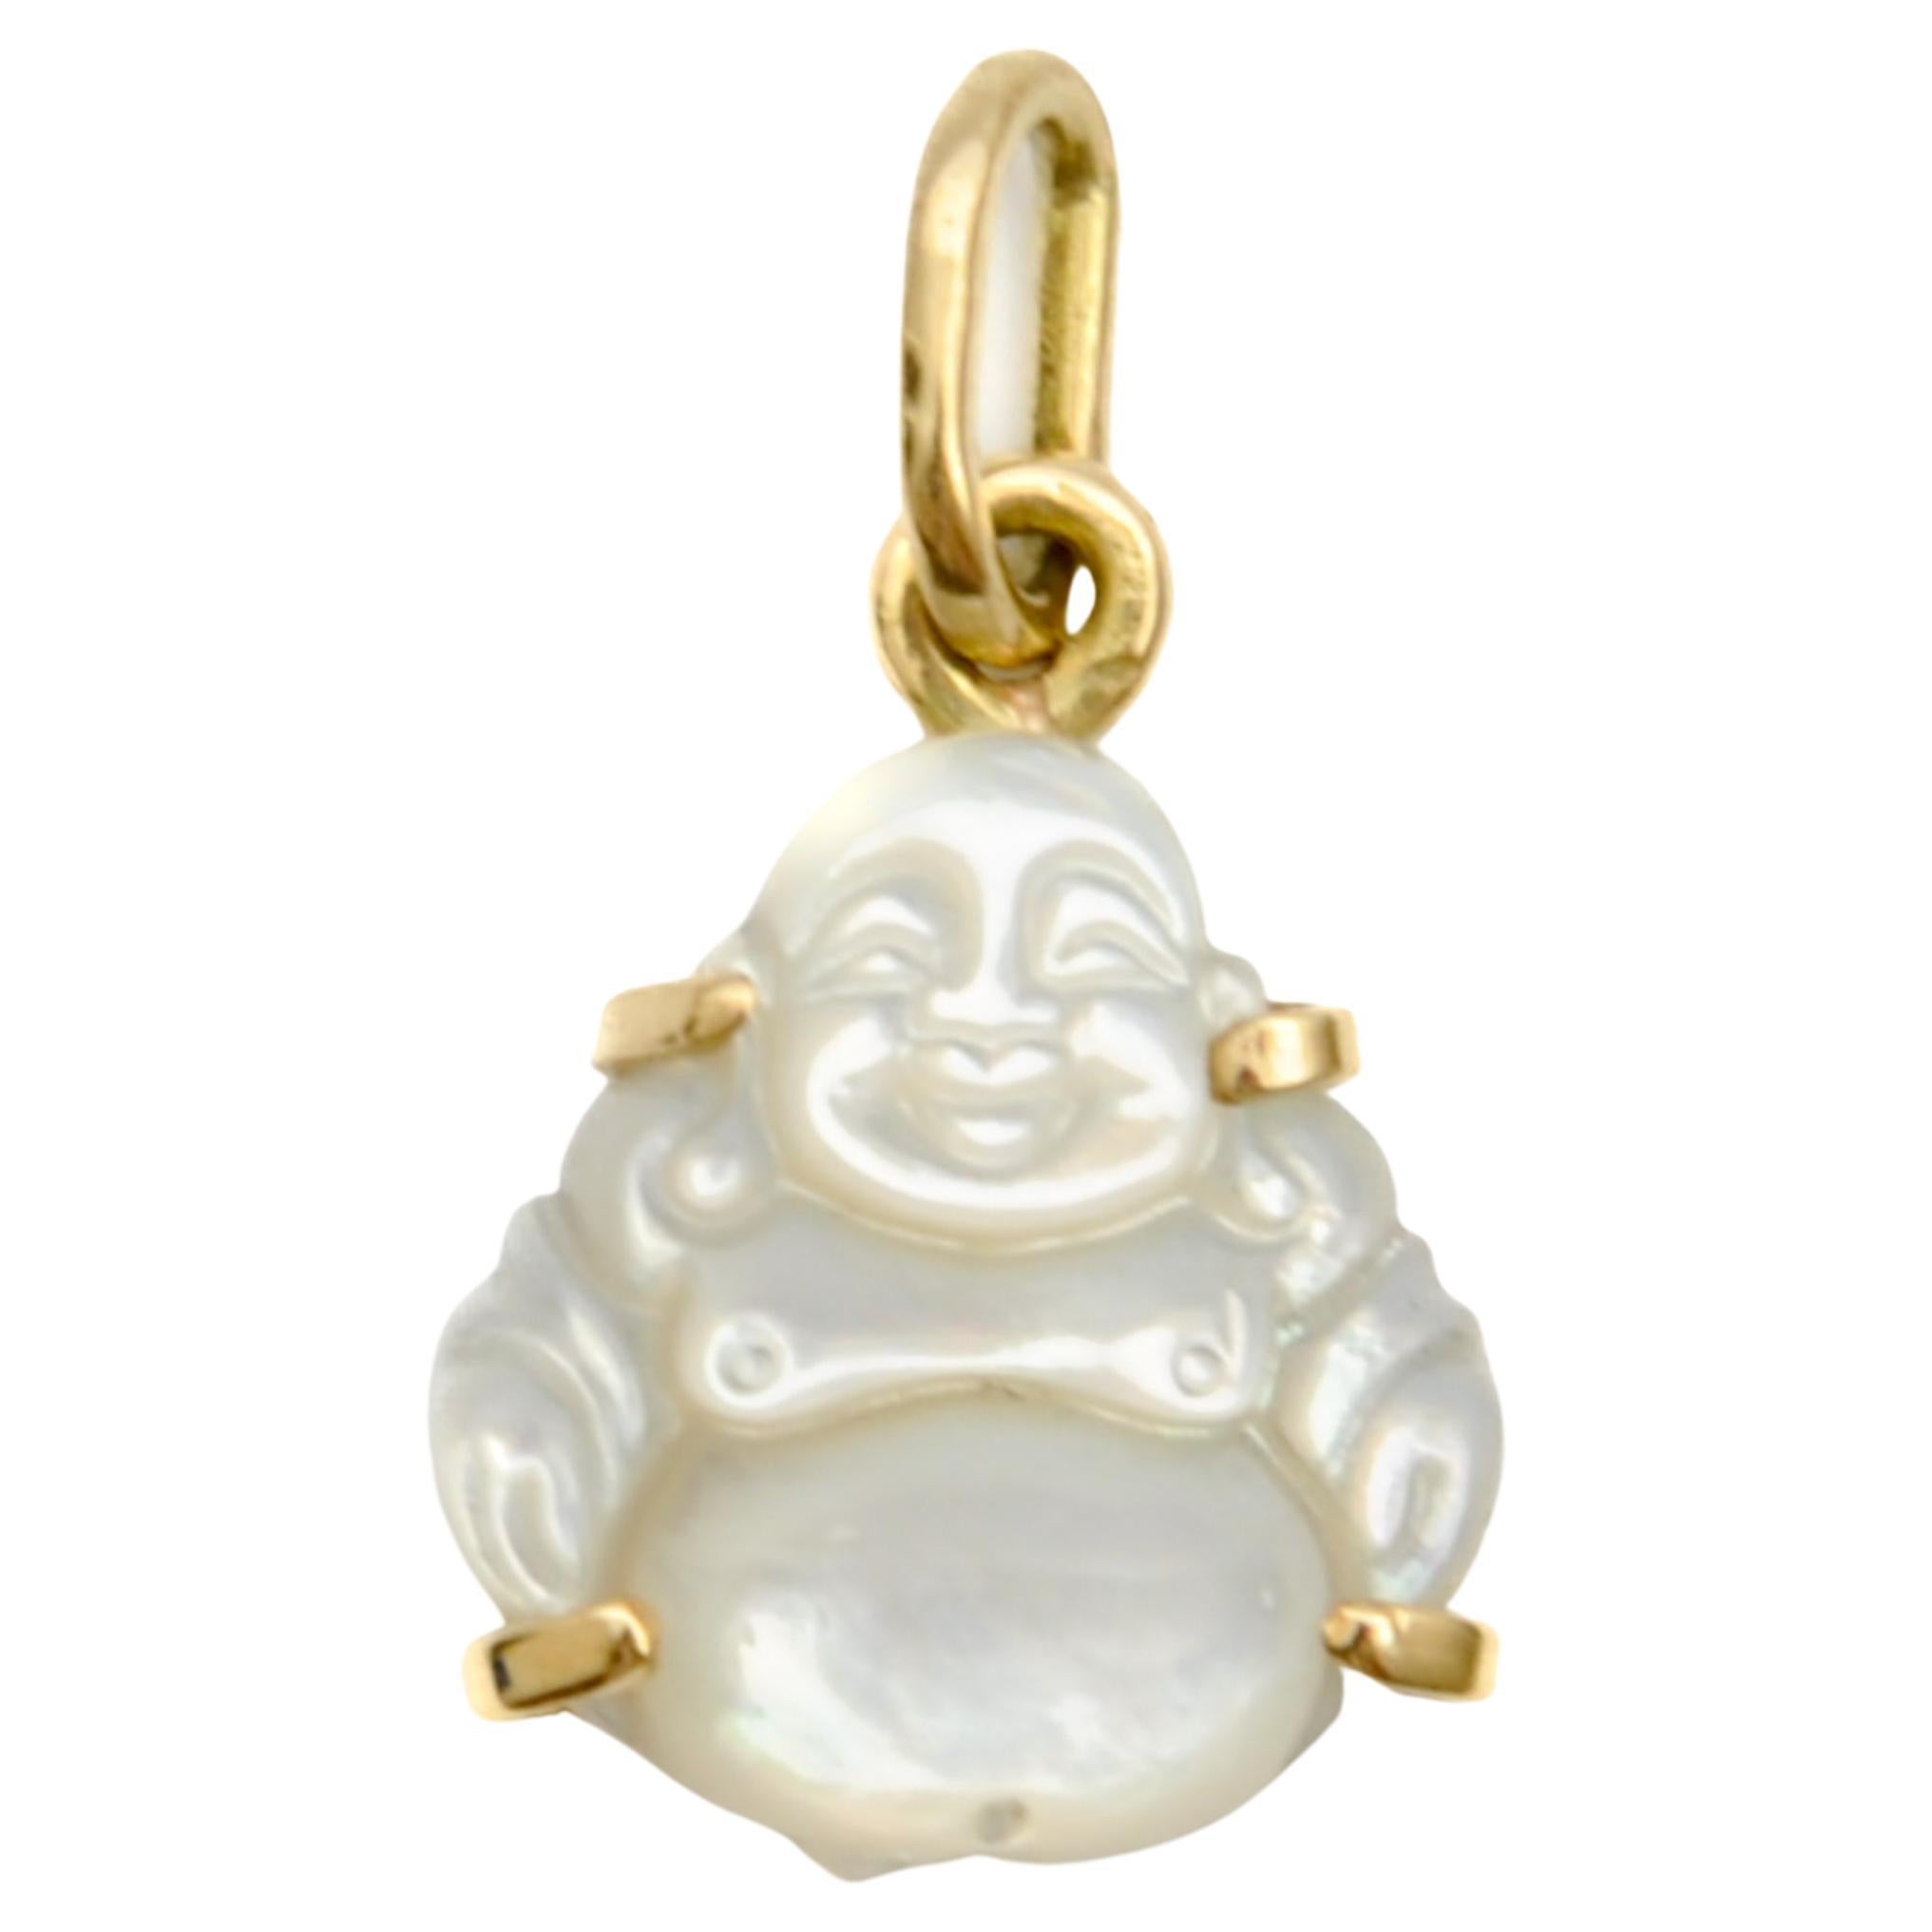 Vintage 14K Gold Perlmutt Buddha Charm Anhänger